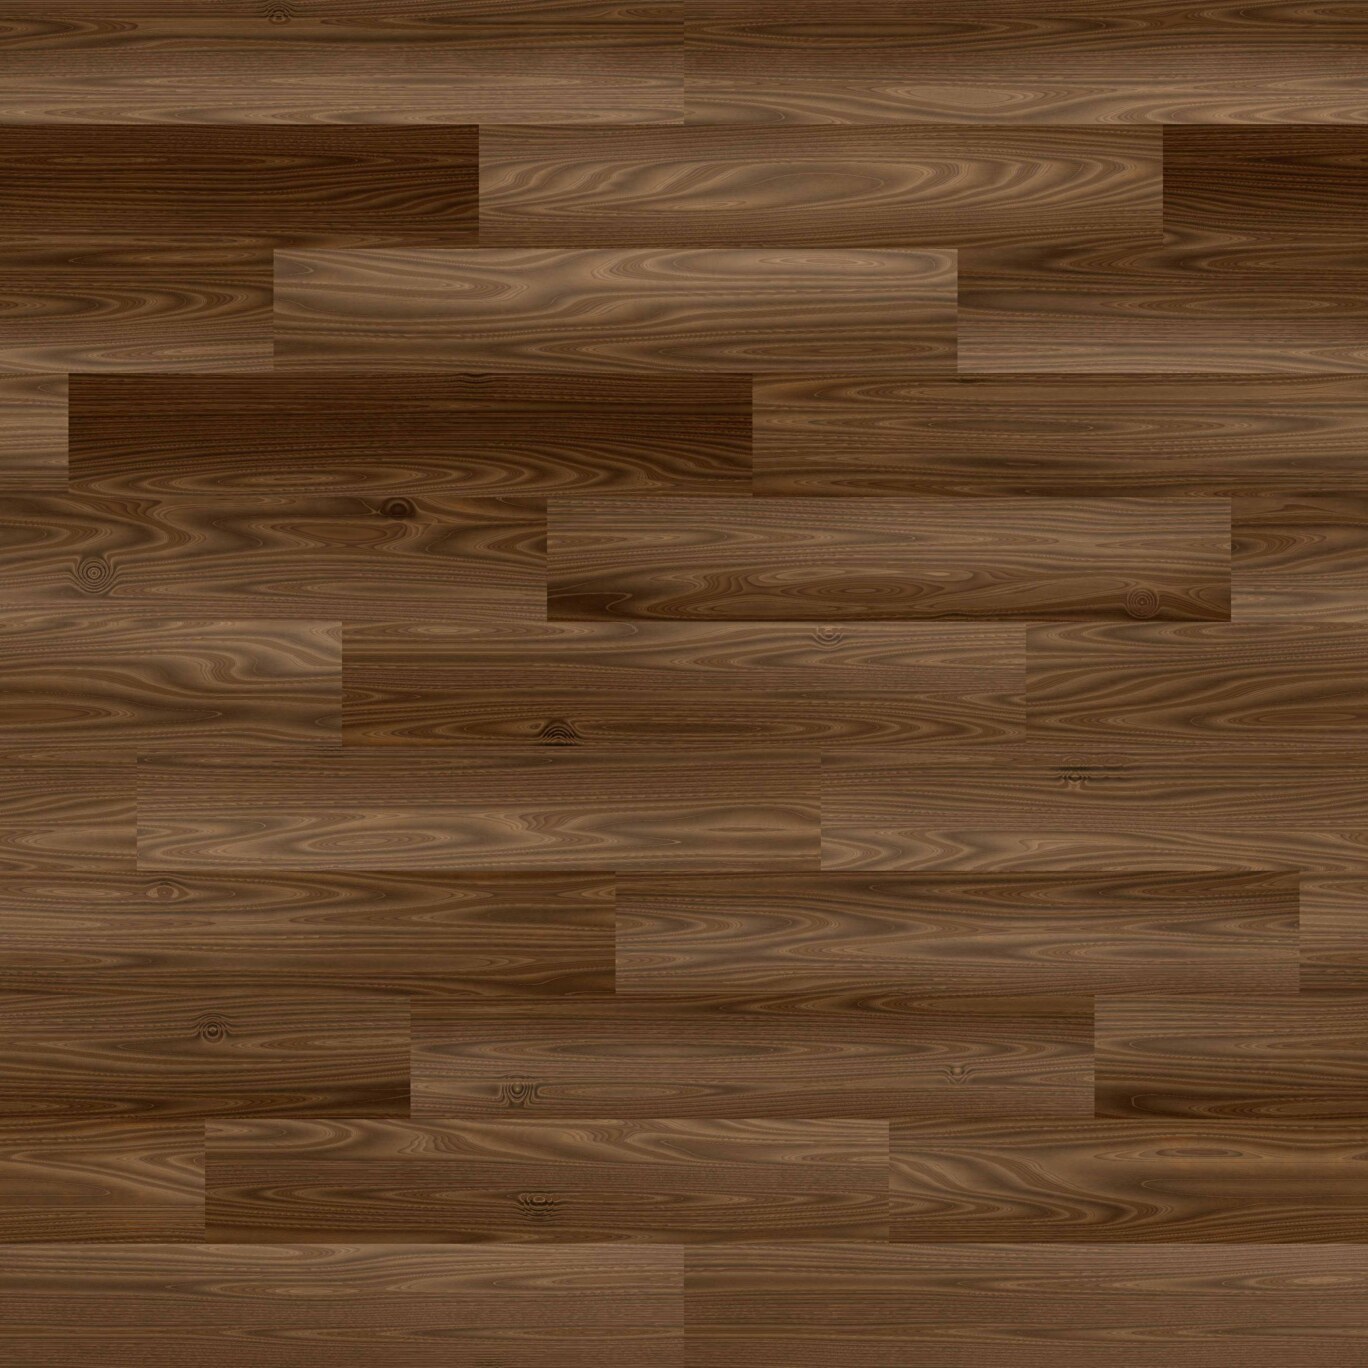 Wood Floor Parquet Texture 3D BPR Free Download Seamless 4K